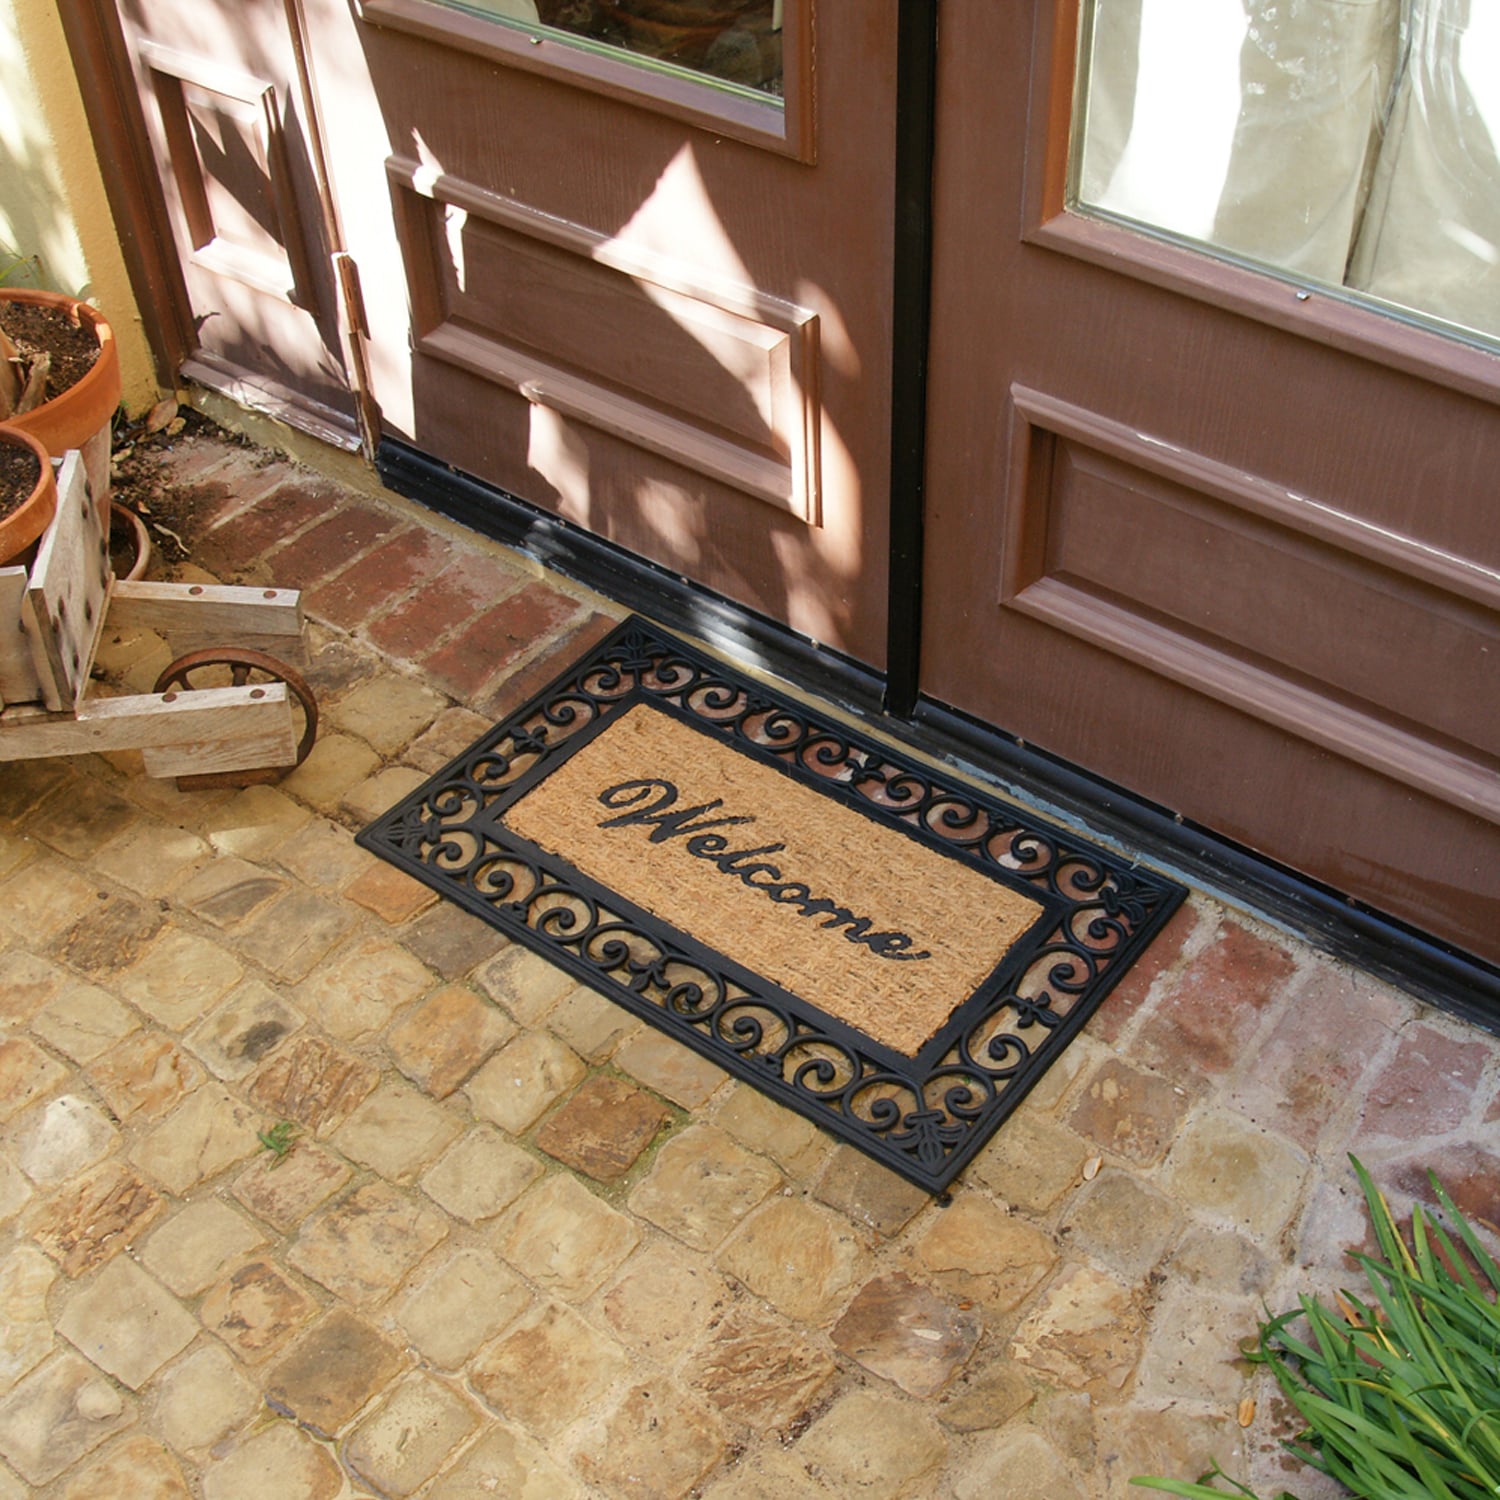 Home & More True Step Wave Rubber Doormat